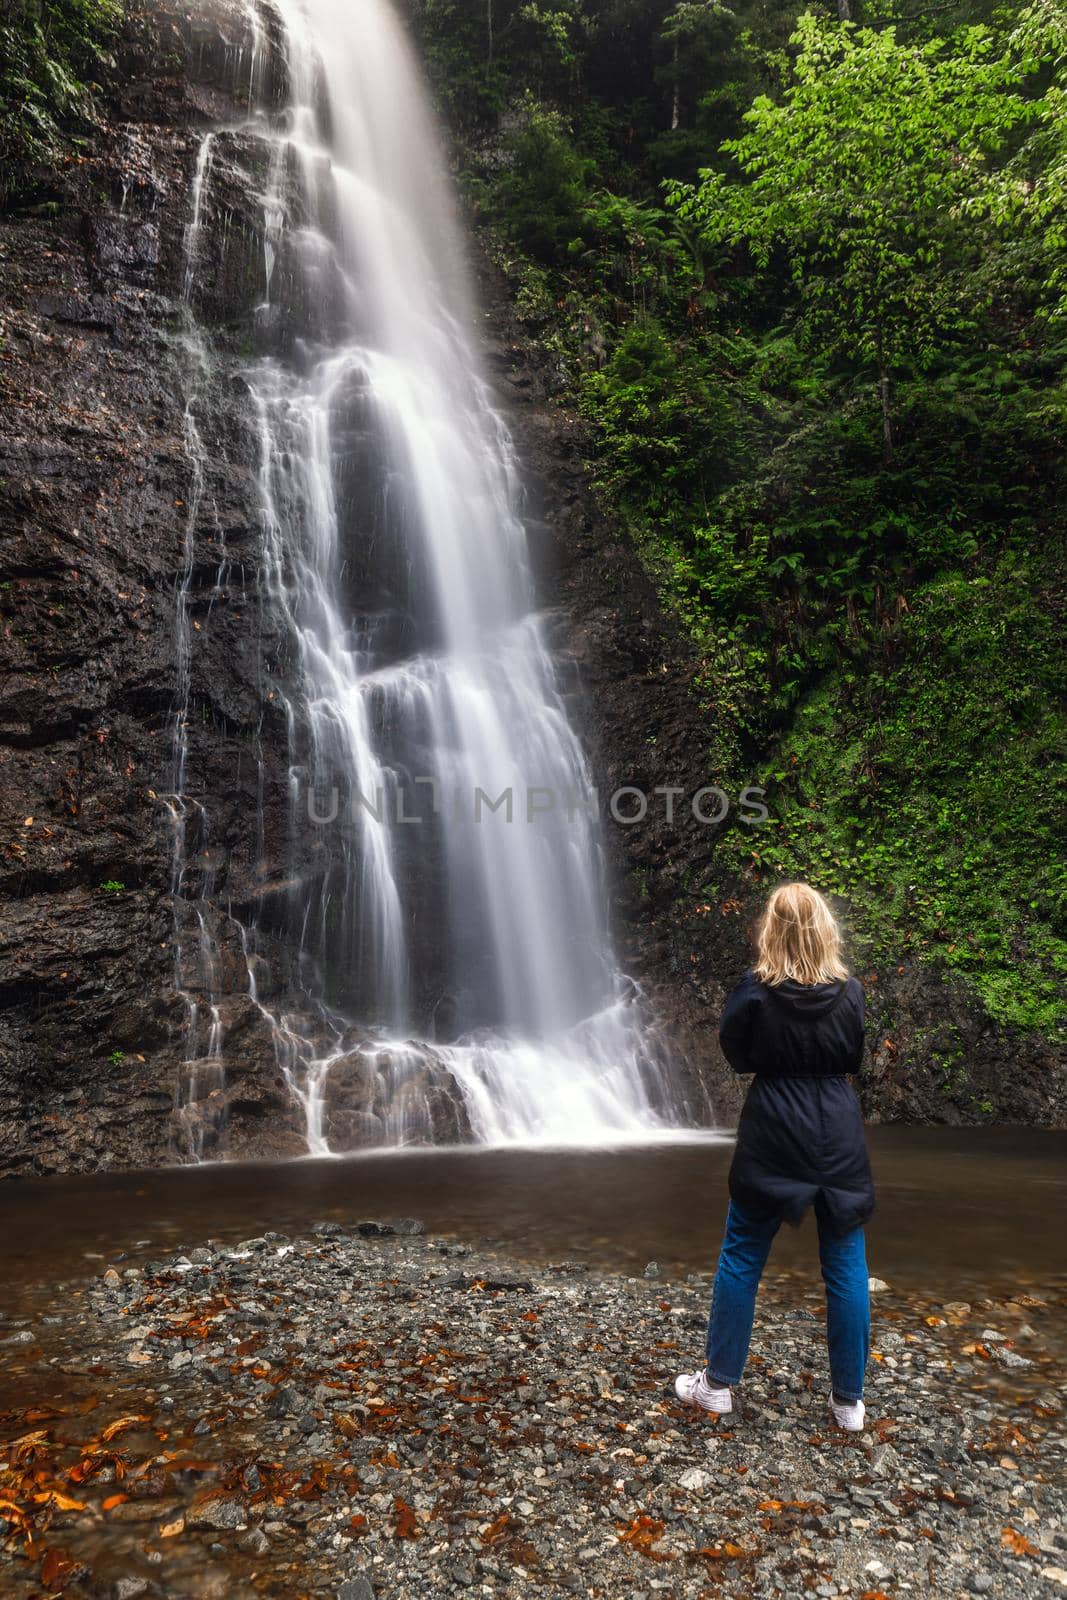 Woman posing at the Tar waterfall near Rize, Turkey.